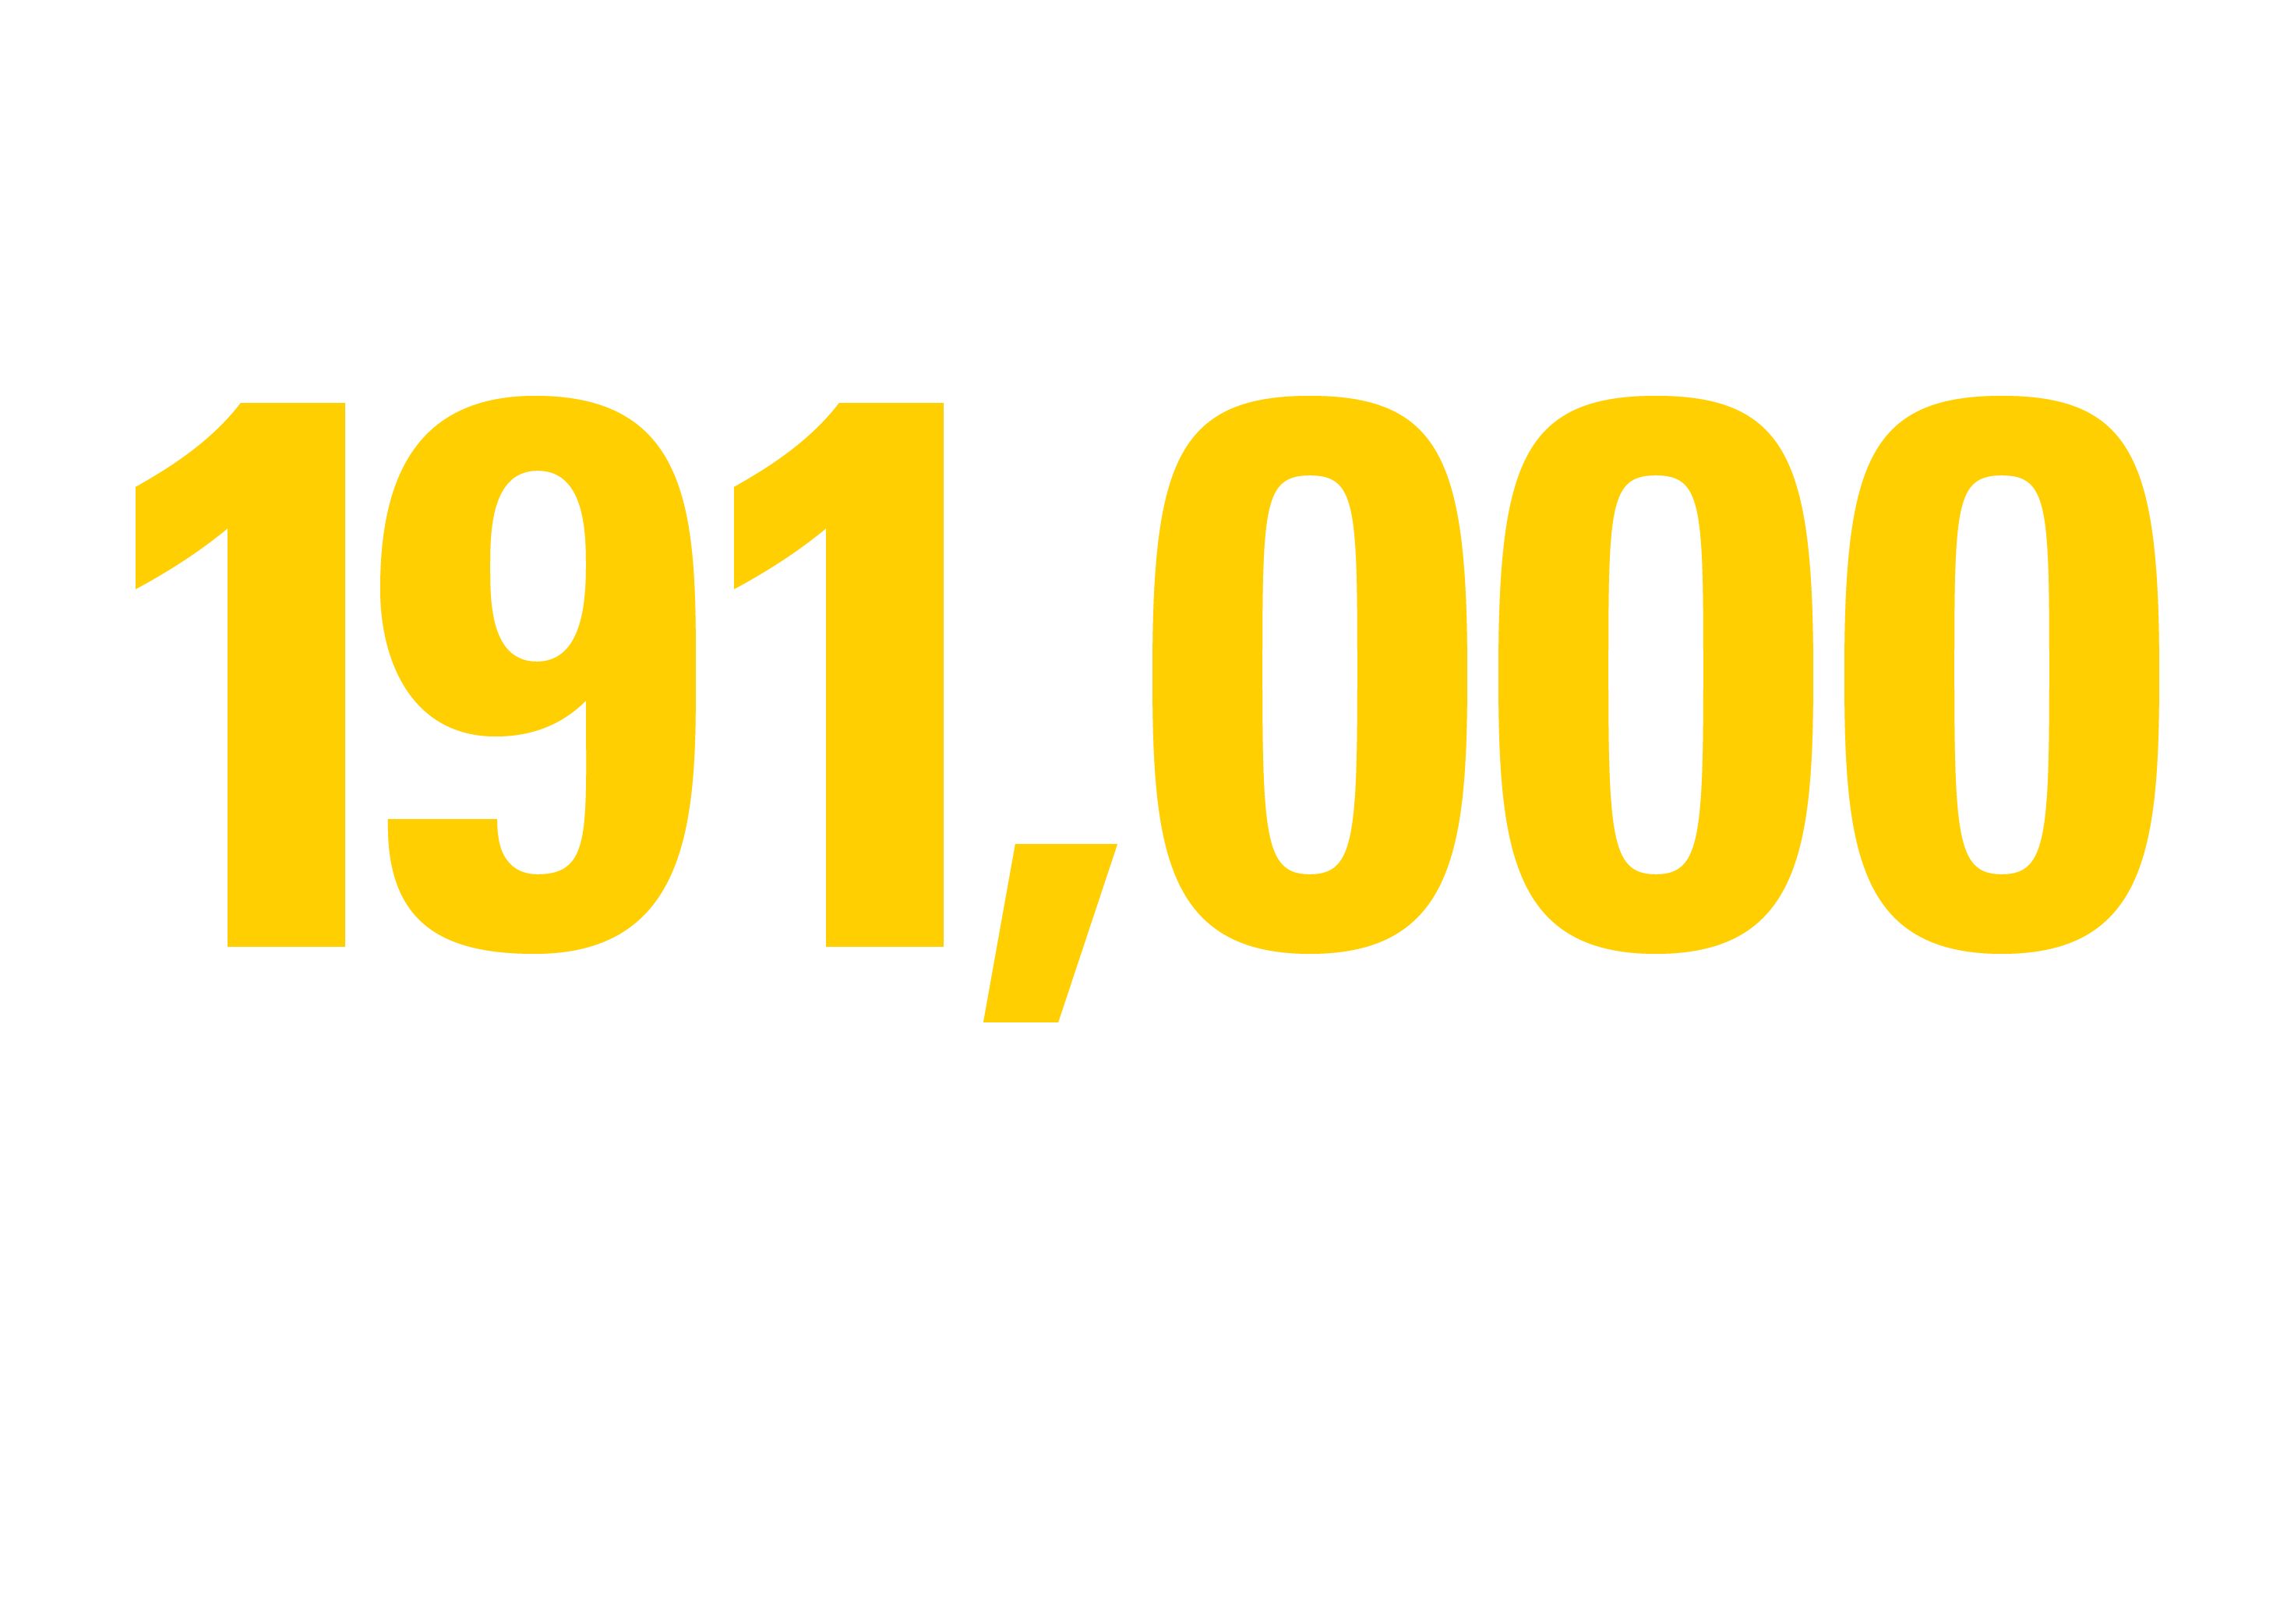 191,000 Patients Seen per Year